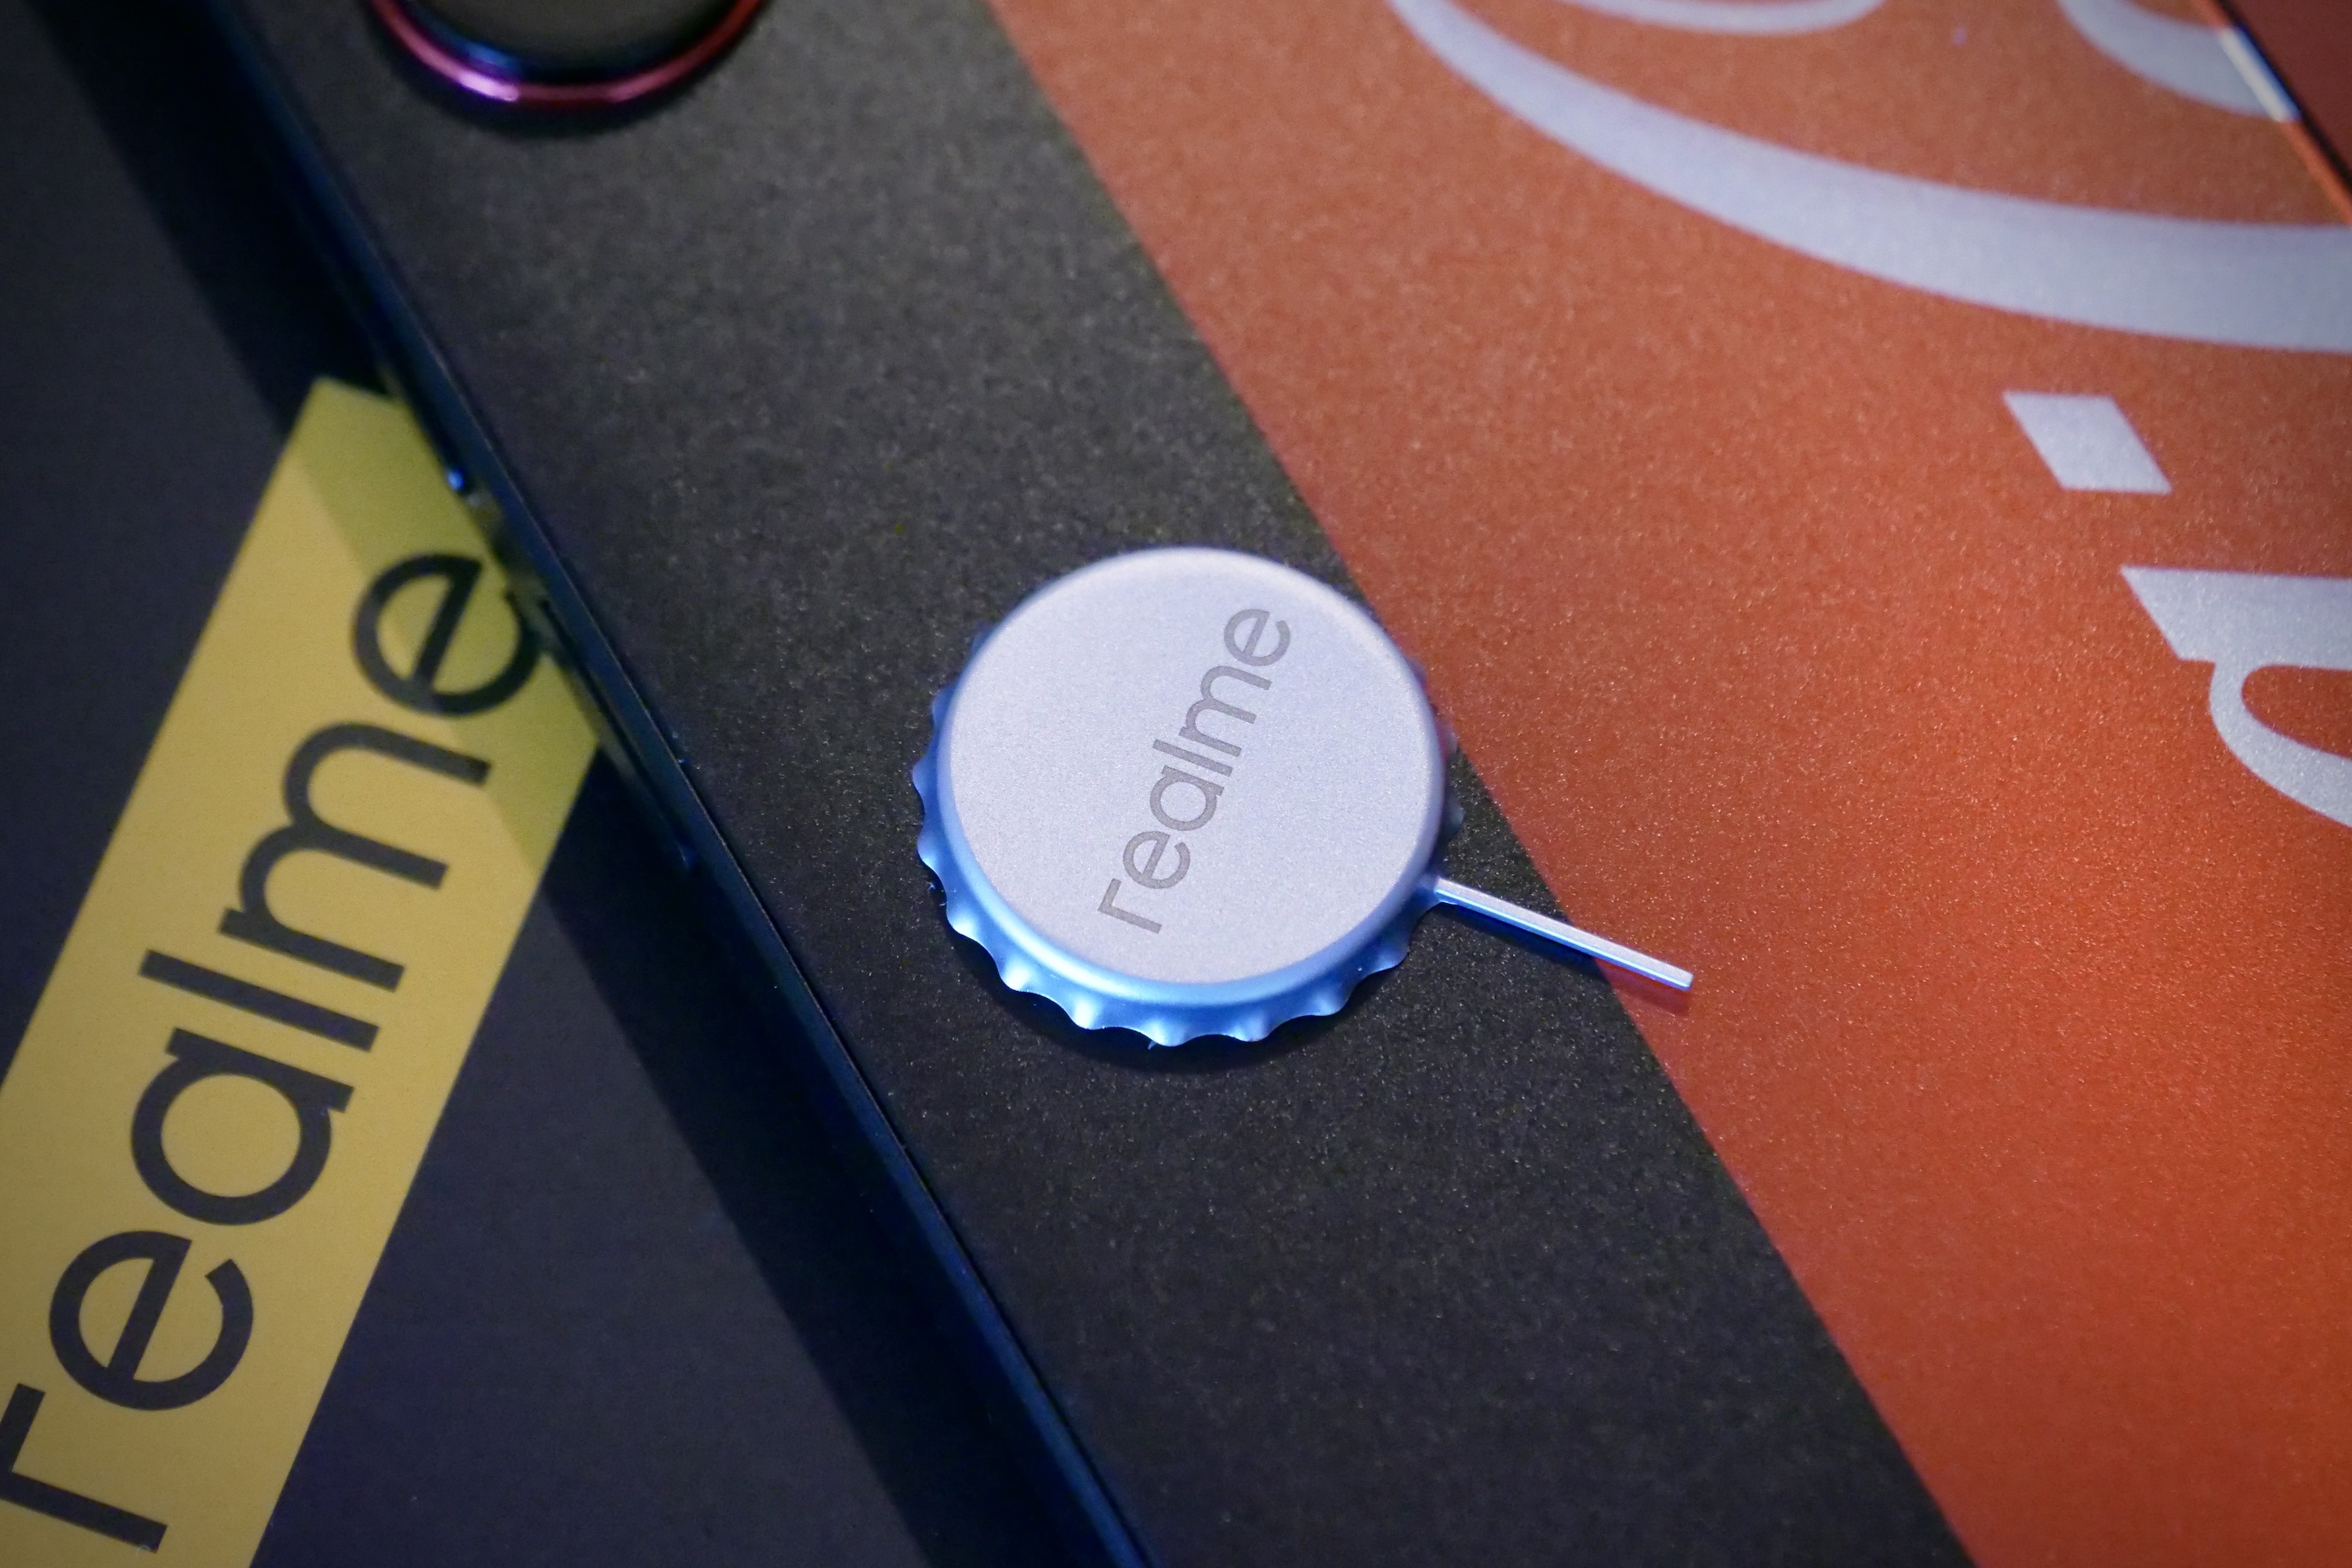 The Realme X Coca-Cola phone's SIM tray removal tool.